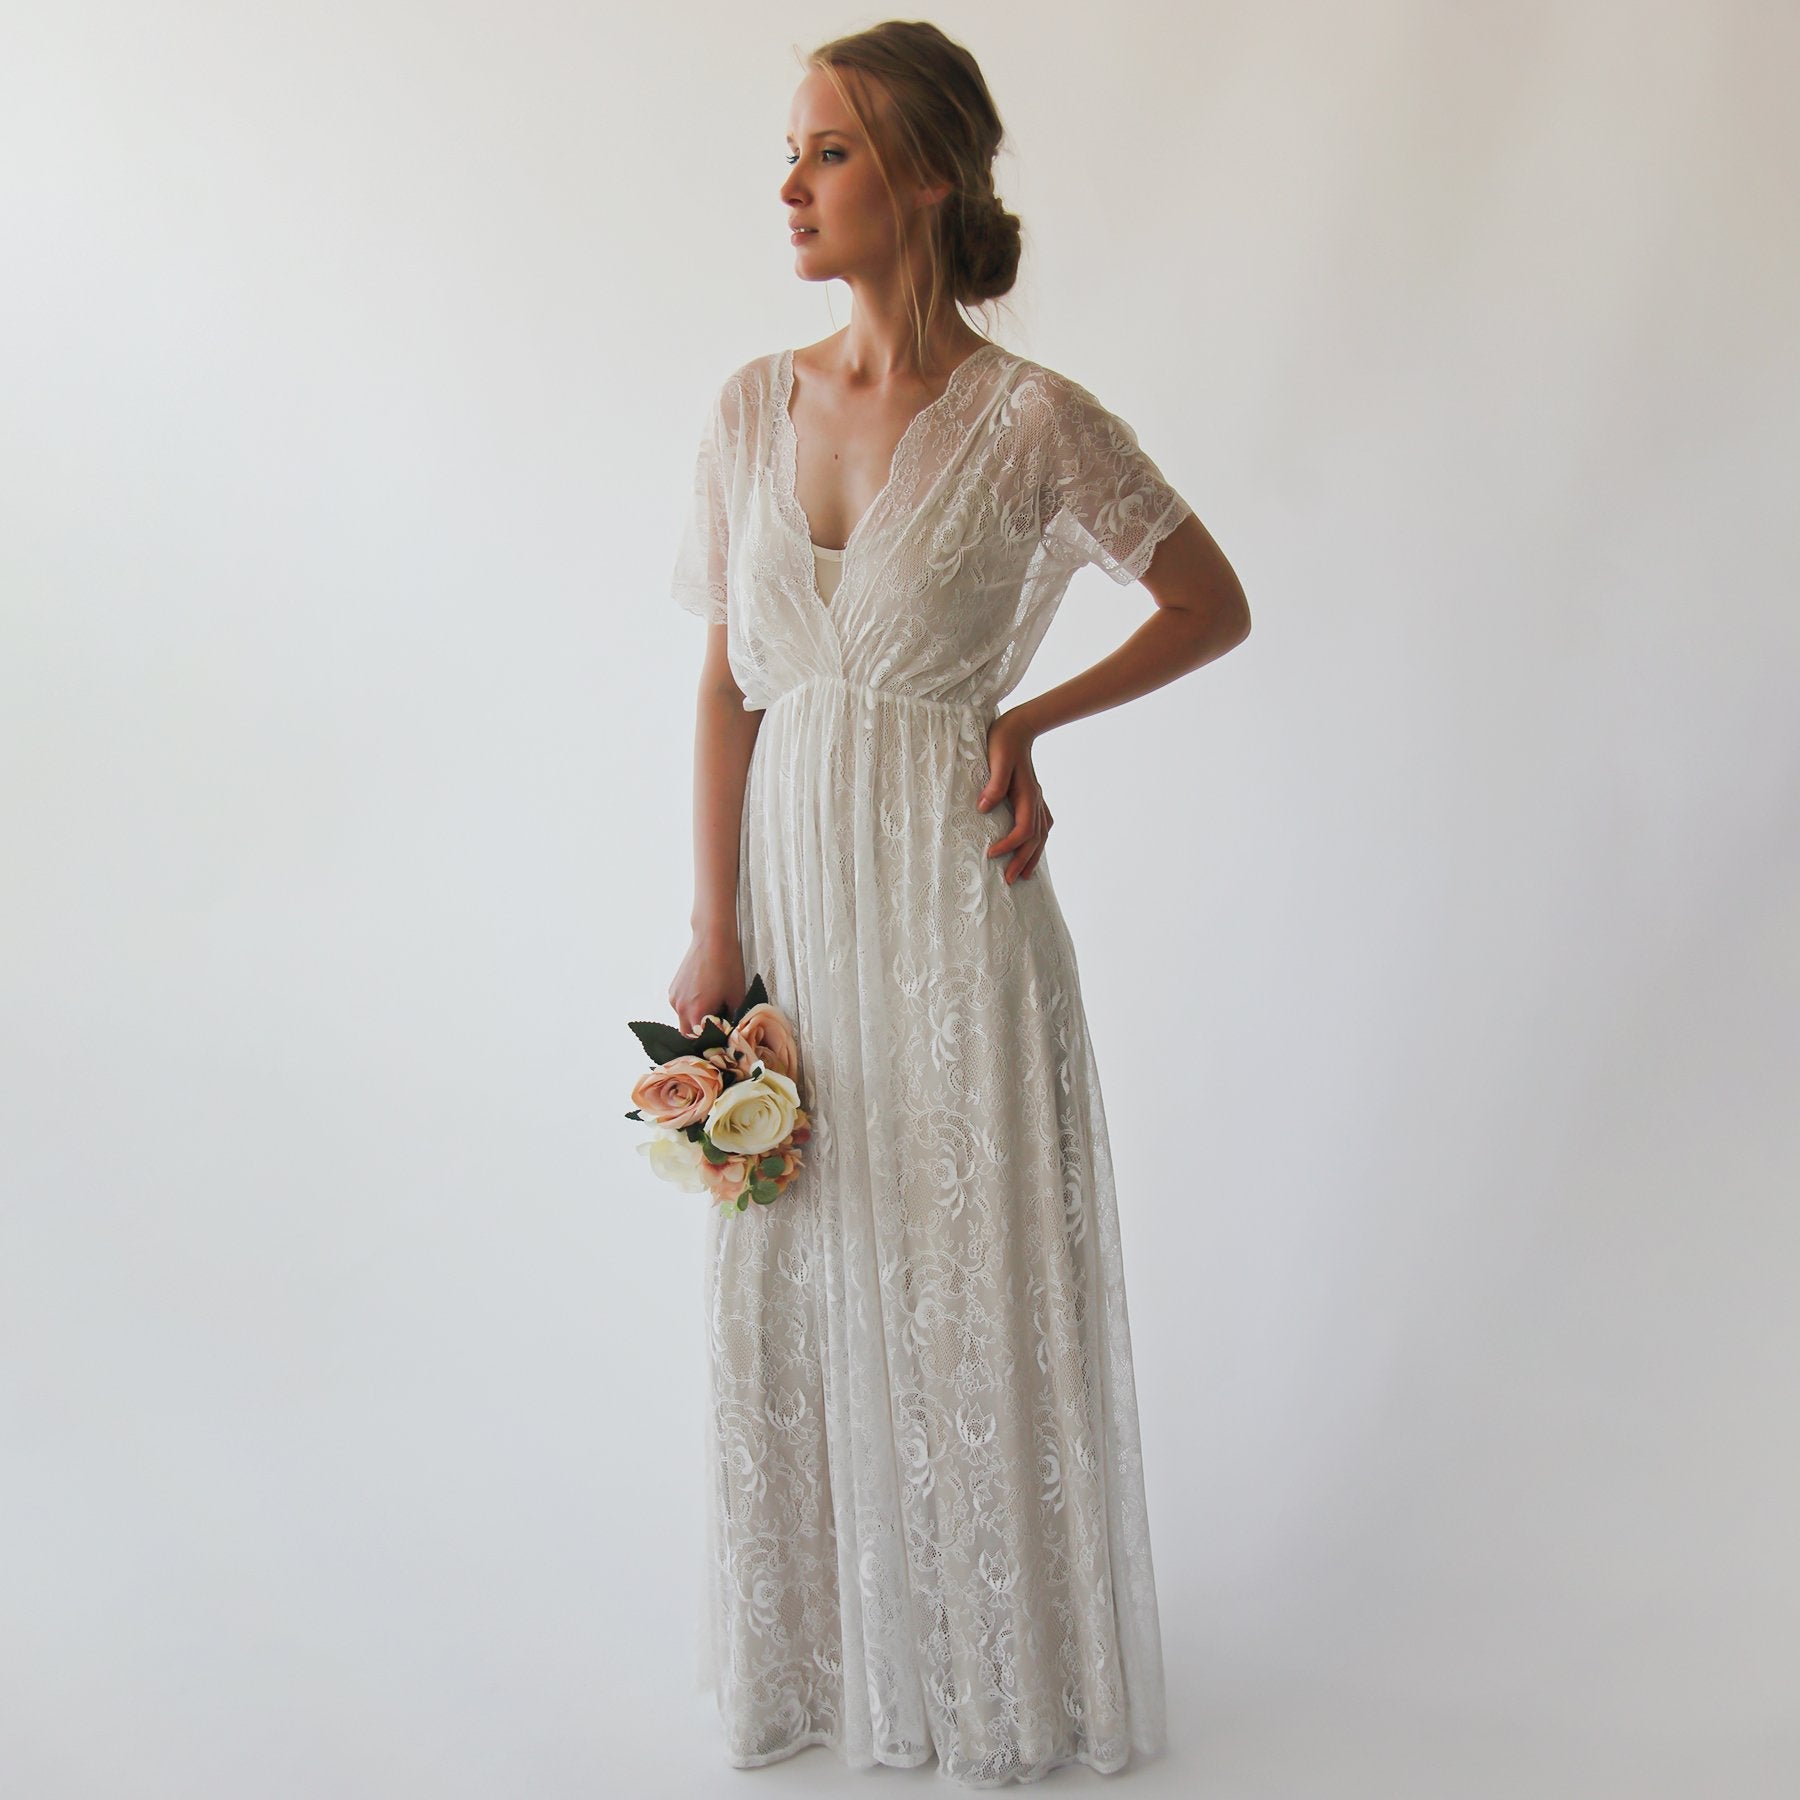 Elegant Floral Lace Wedding Dress for Plus Size #1044